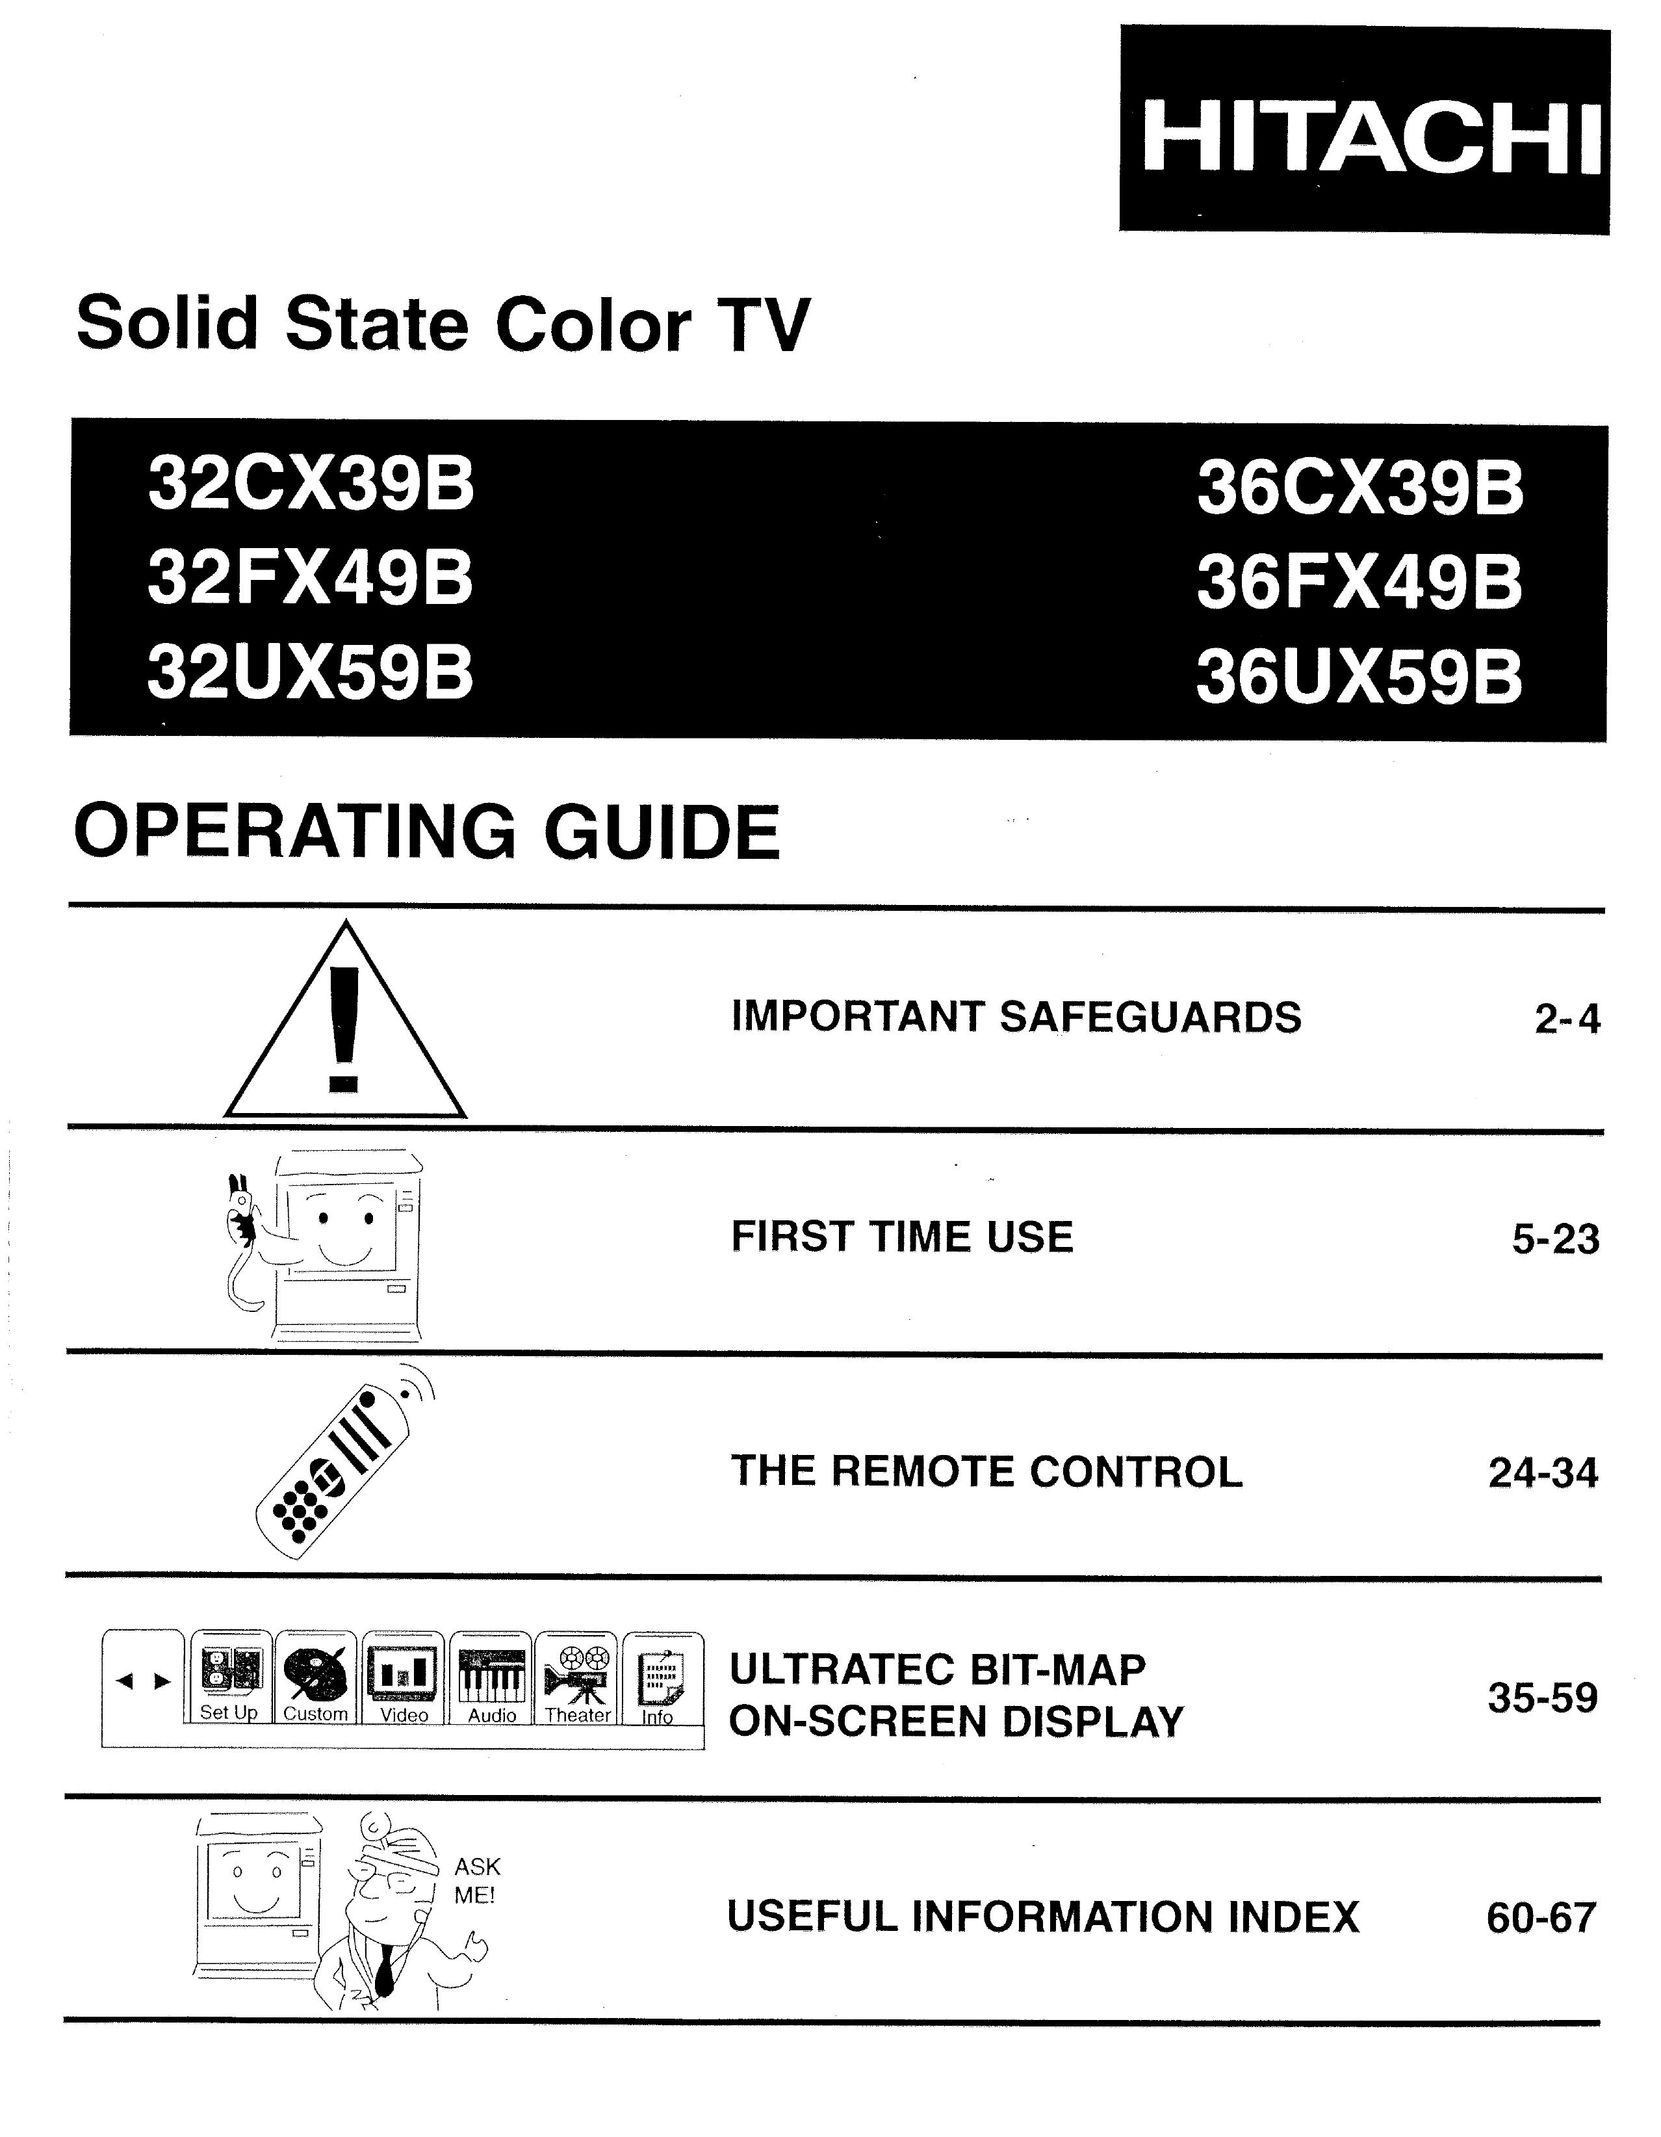 Hitachi 32CX39B CRT Television User Manual